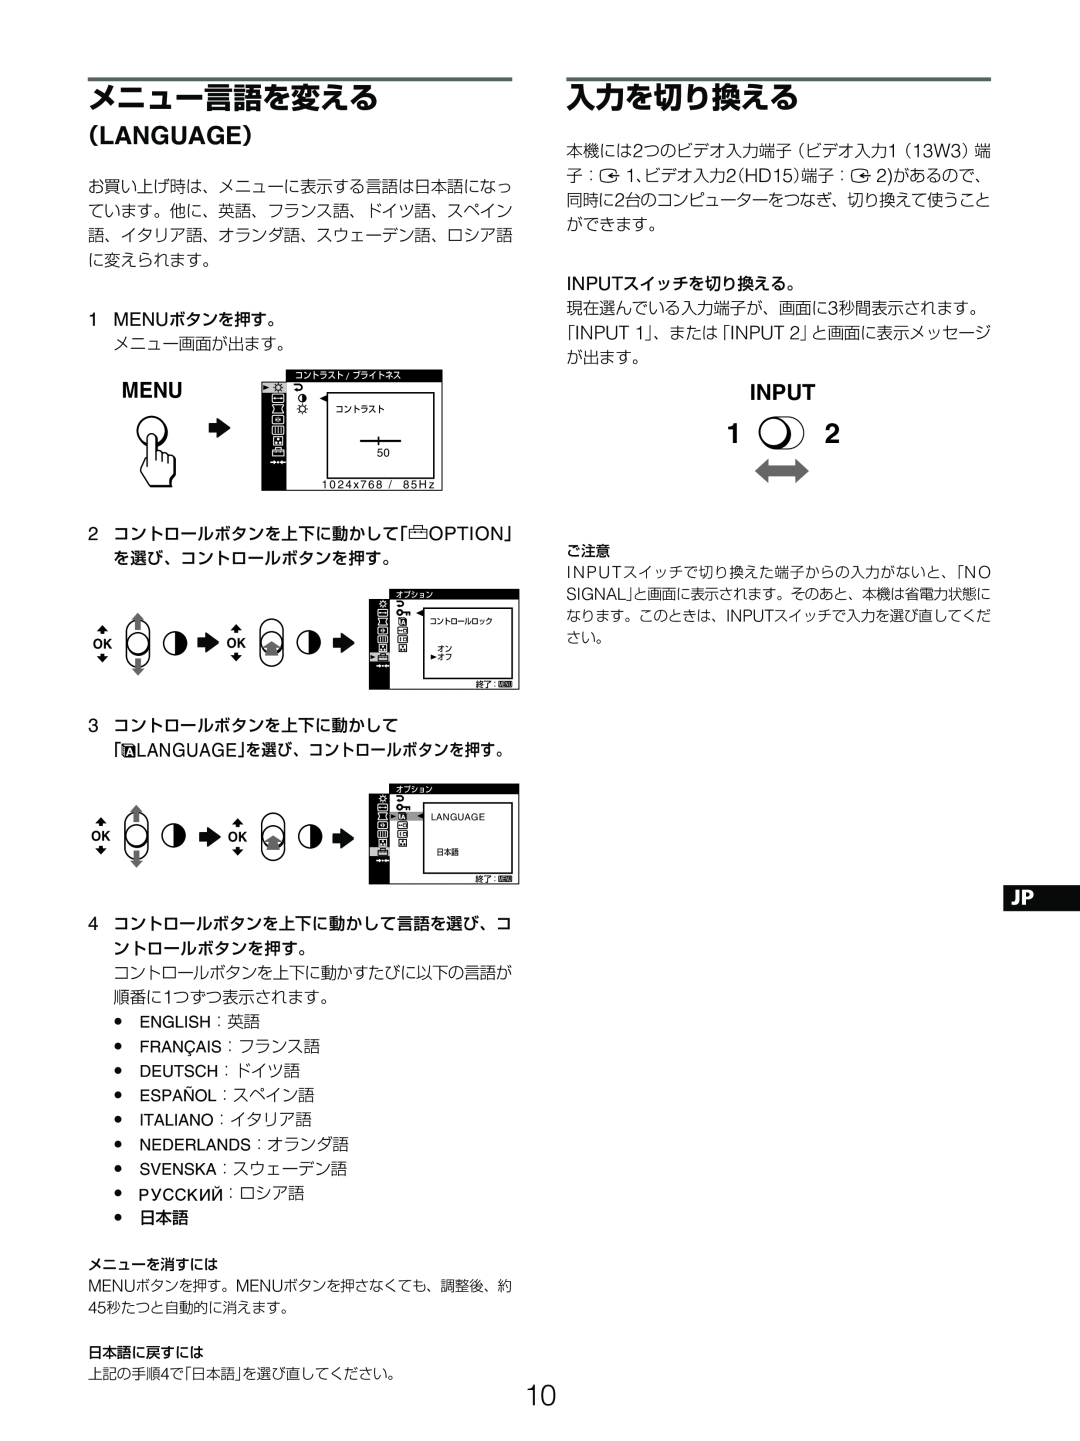 Sony GDM-5510 operating instructions b OK, メニュー言語を変える, 入力を切り換える, （Language）, Menu, Input 